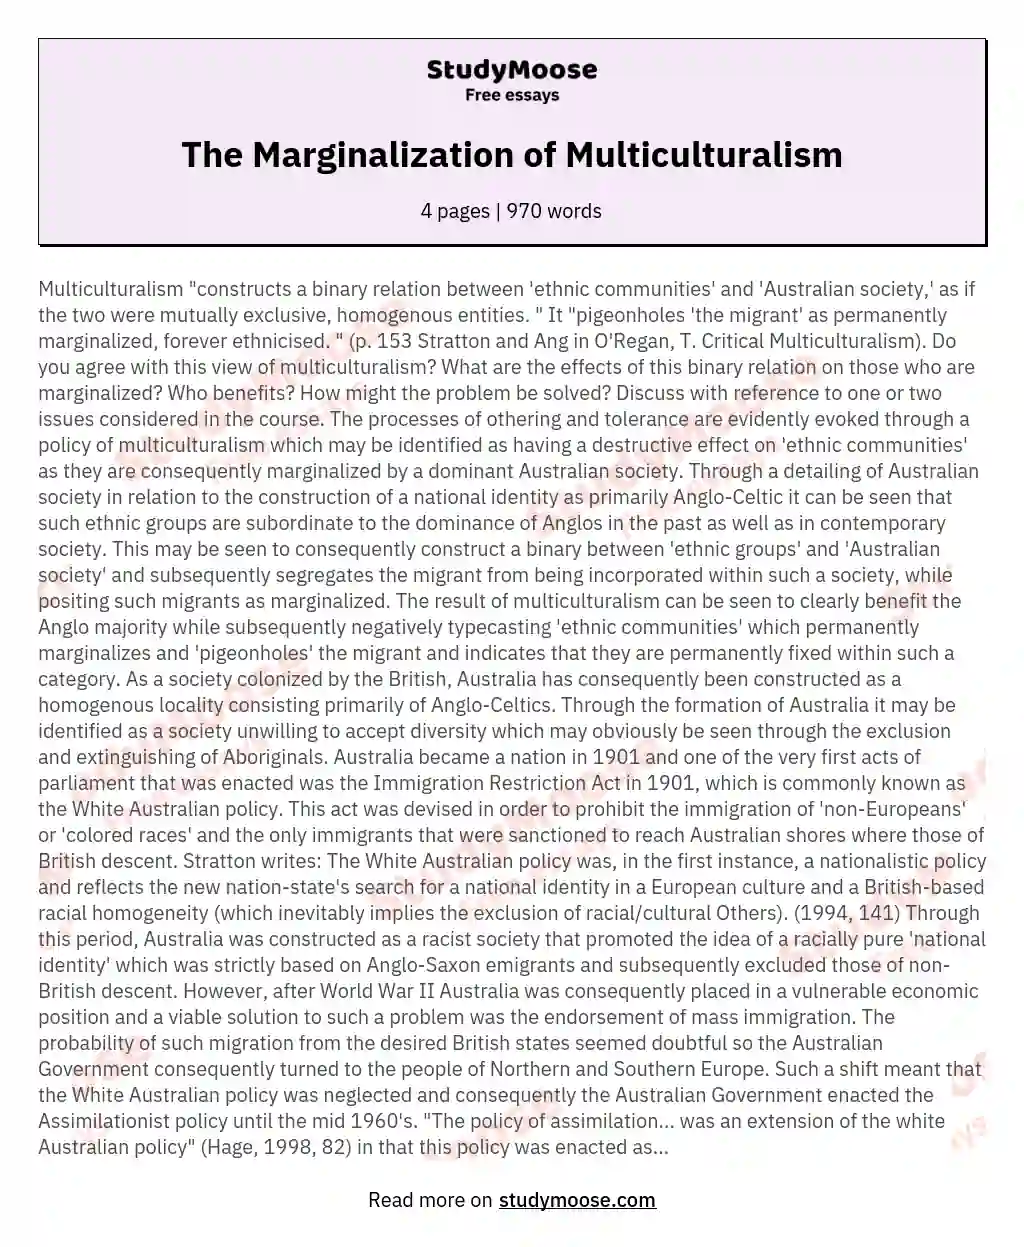 The Marginalization of Multiculturalism essay